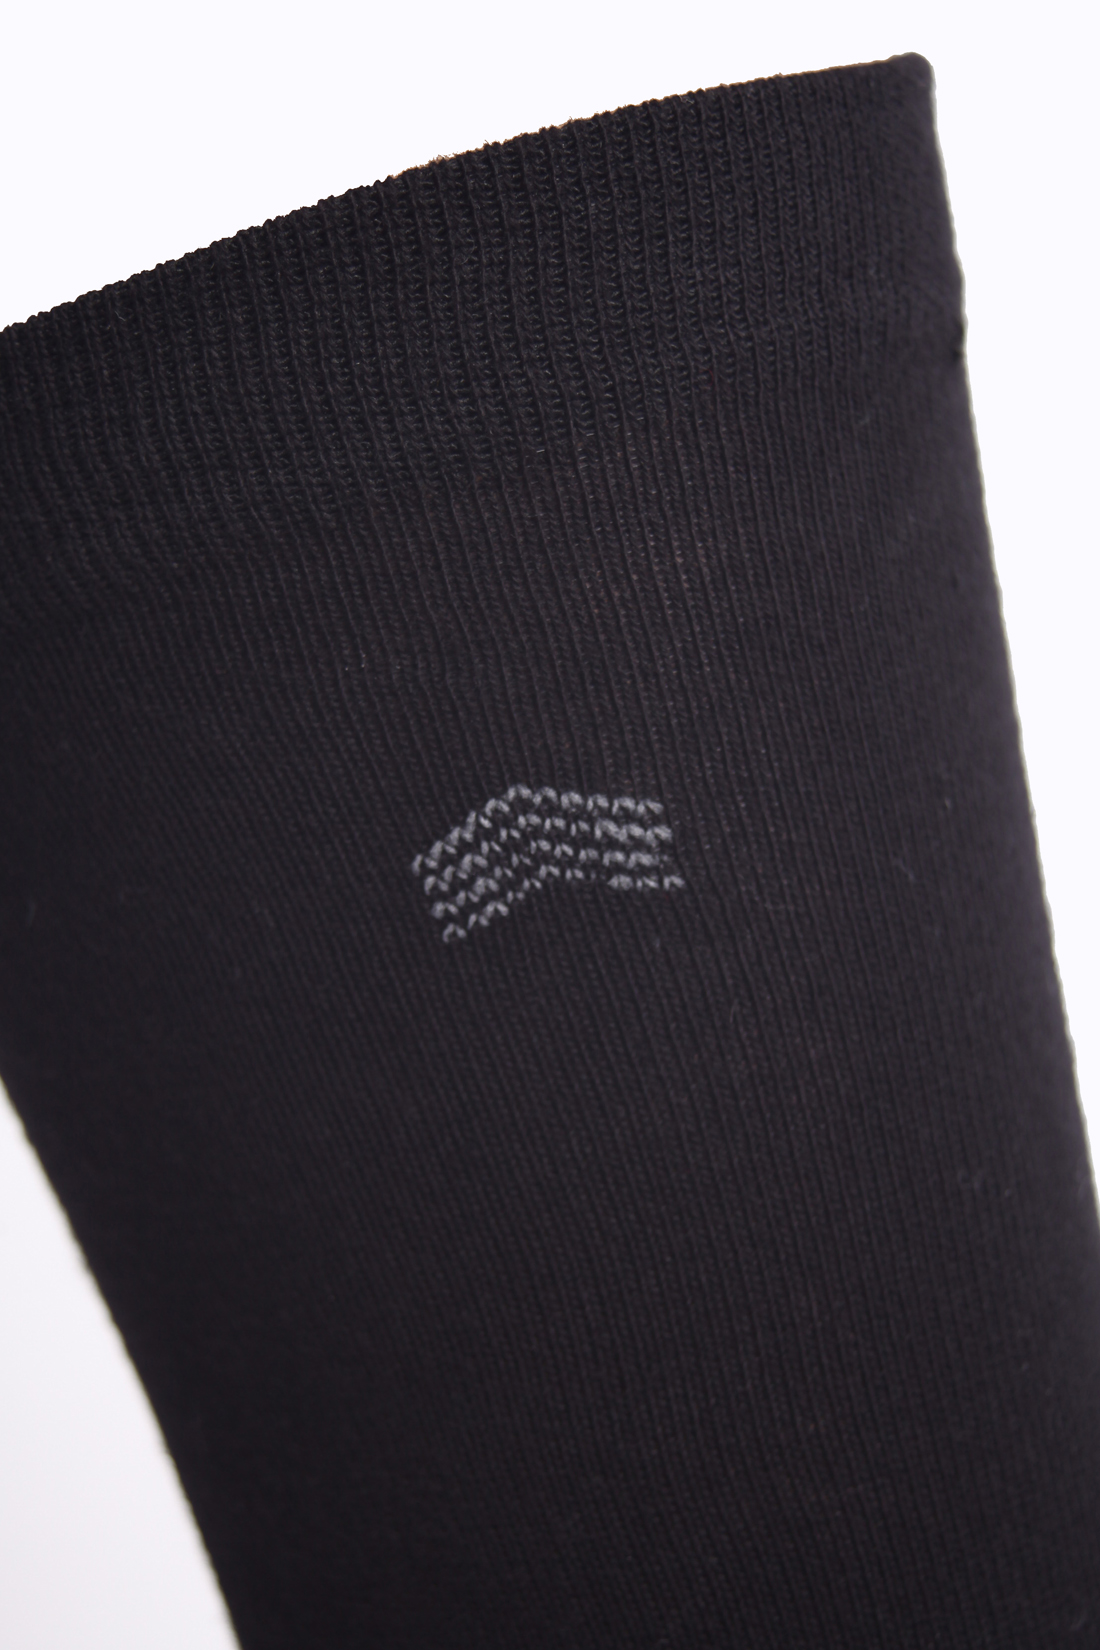 Мужские носки, 2 пары (арт. baon B891101), размер 43/45, цвет черный Мужские носки, 2 пары (арт. baon B891101) - фото 2